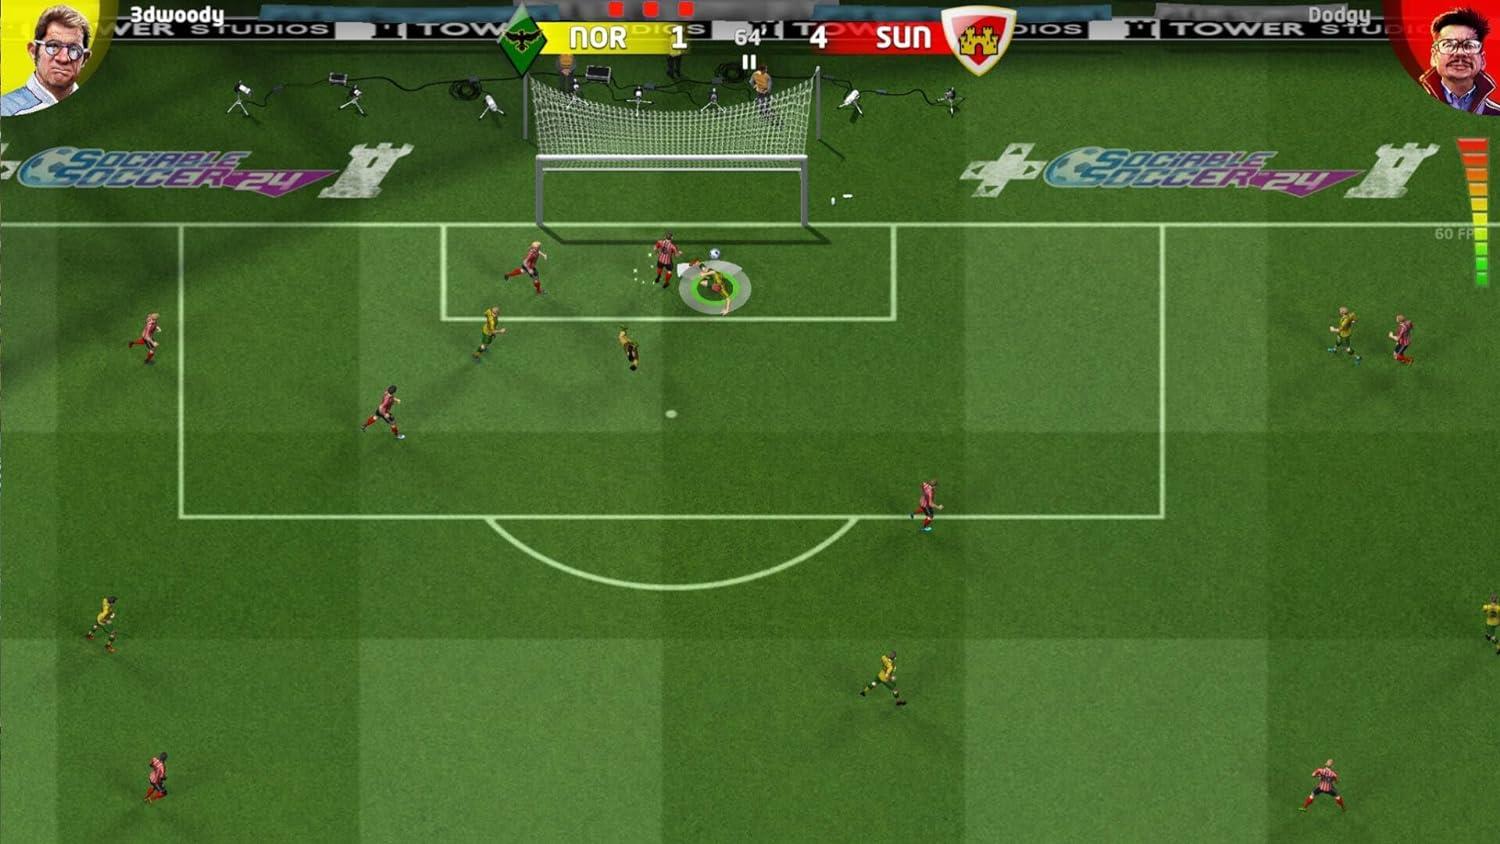 Sociable Soccer 24 PS5 Game